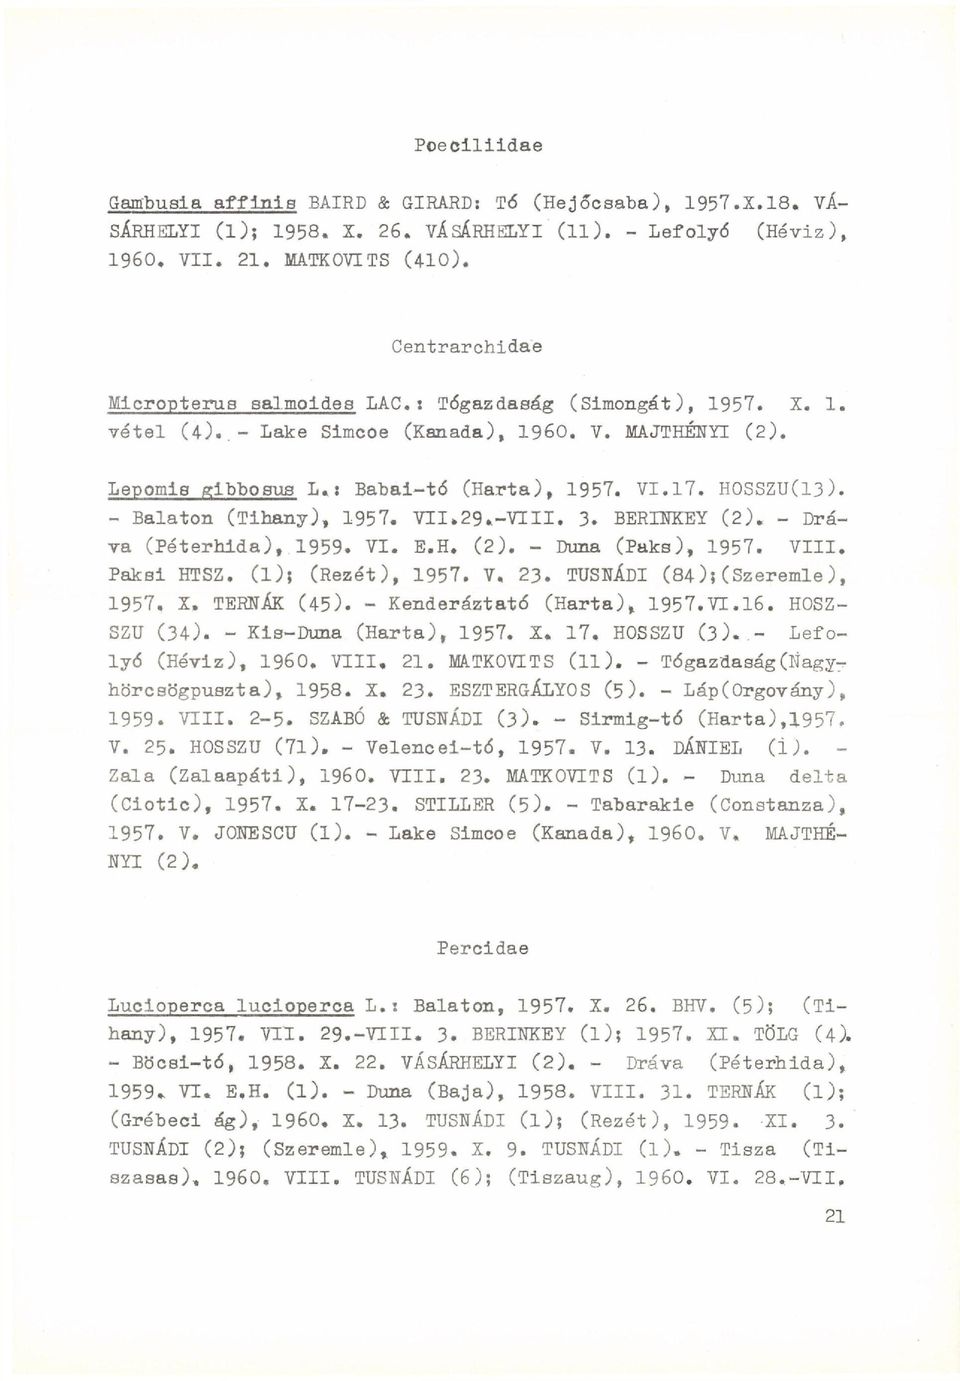 - Balaton (Tihany), 1957. VII.29.-VIII. 3. BERINKEY (2). - Dráva (Péterhida), 1959. VI. E.H. (2). - Duna (Paks), 1957. VIII. Paksi HTSZ. ( l ) ; (Rezét), 1957. V, 23. TUSNÁDI (84);(Szeremle), 1957, X.